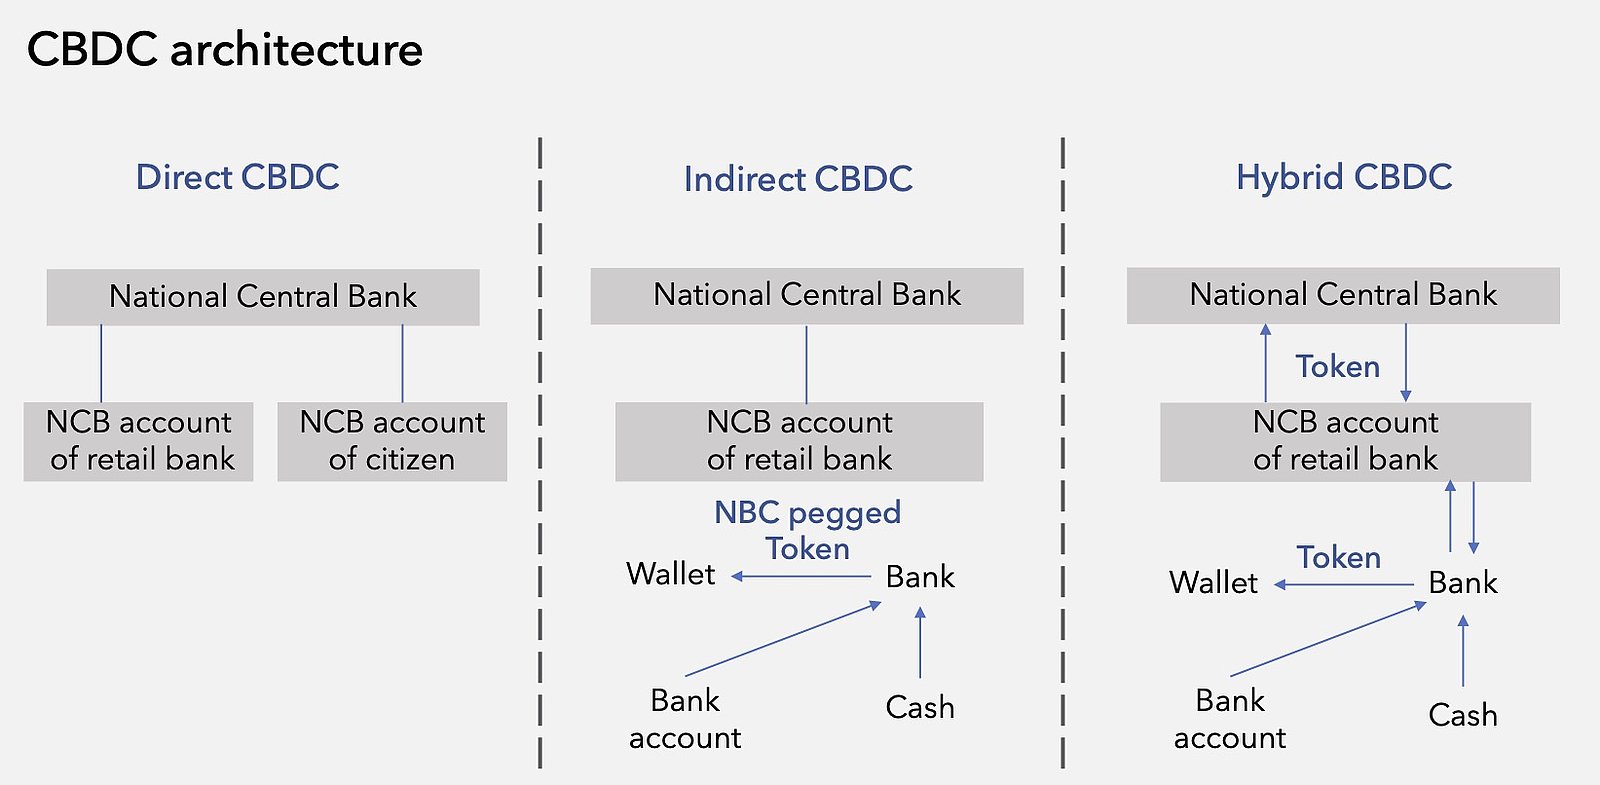 Alternativen von digitalem Zentralbankgeld (Retail CBDC)